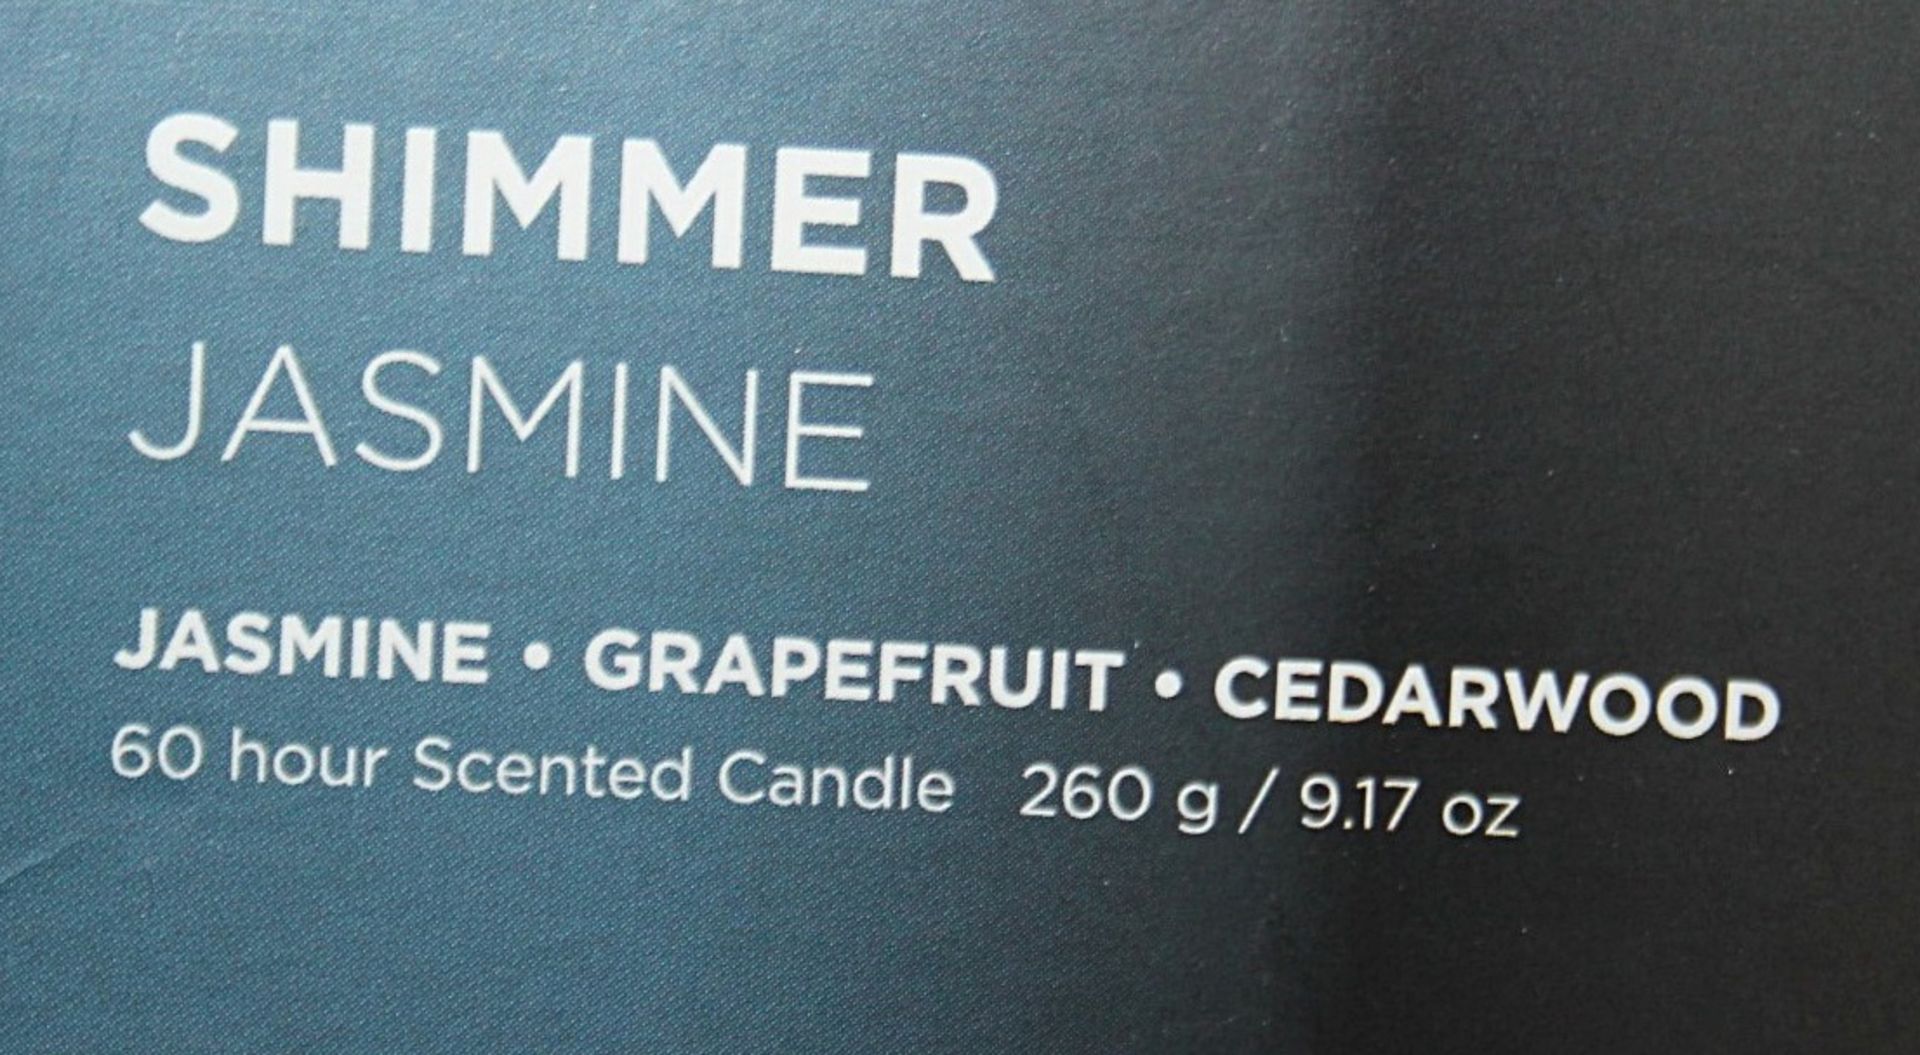 1 x ZAHA HADID DESIGN Shimmer Jasmine Scented Candle (260g) - Original Price £155.00 - Image 2 of 8